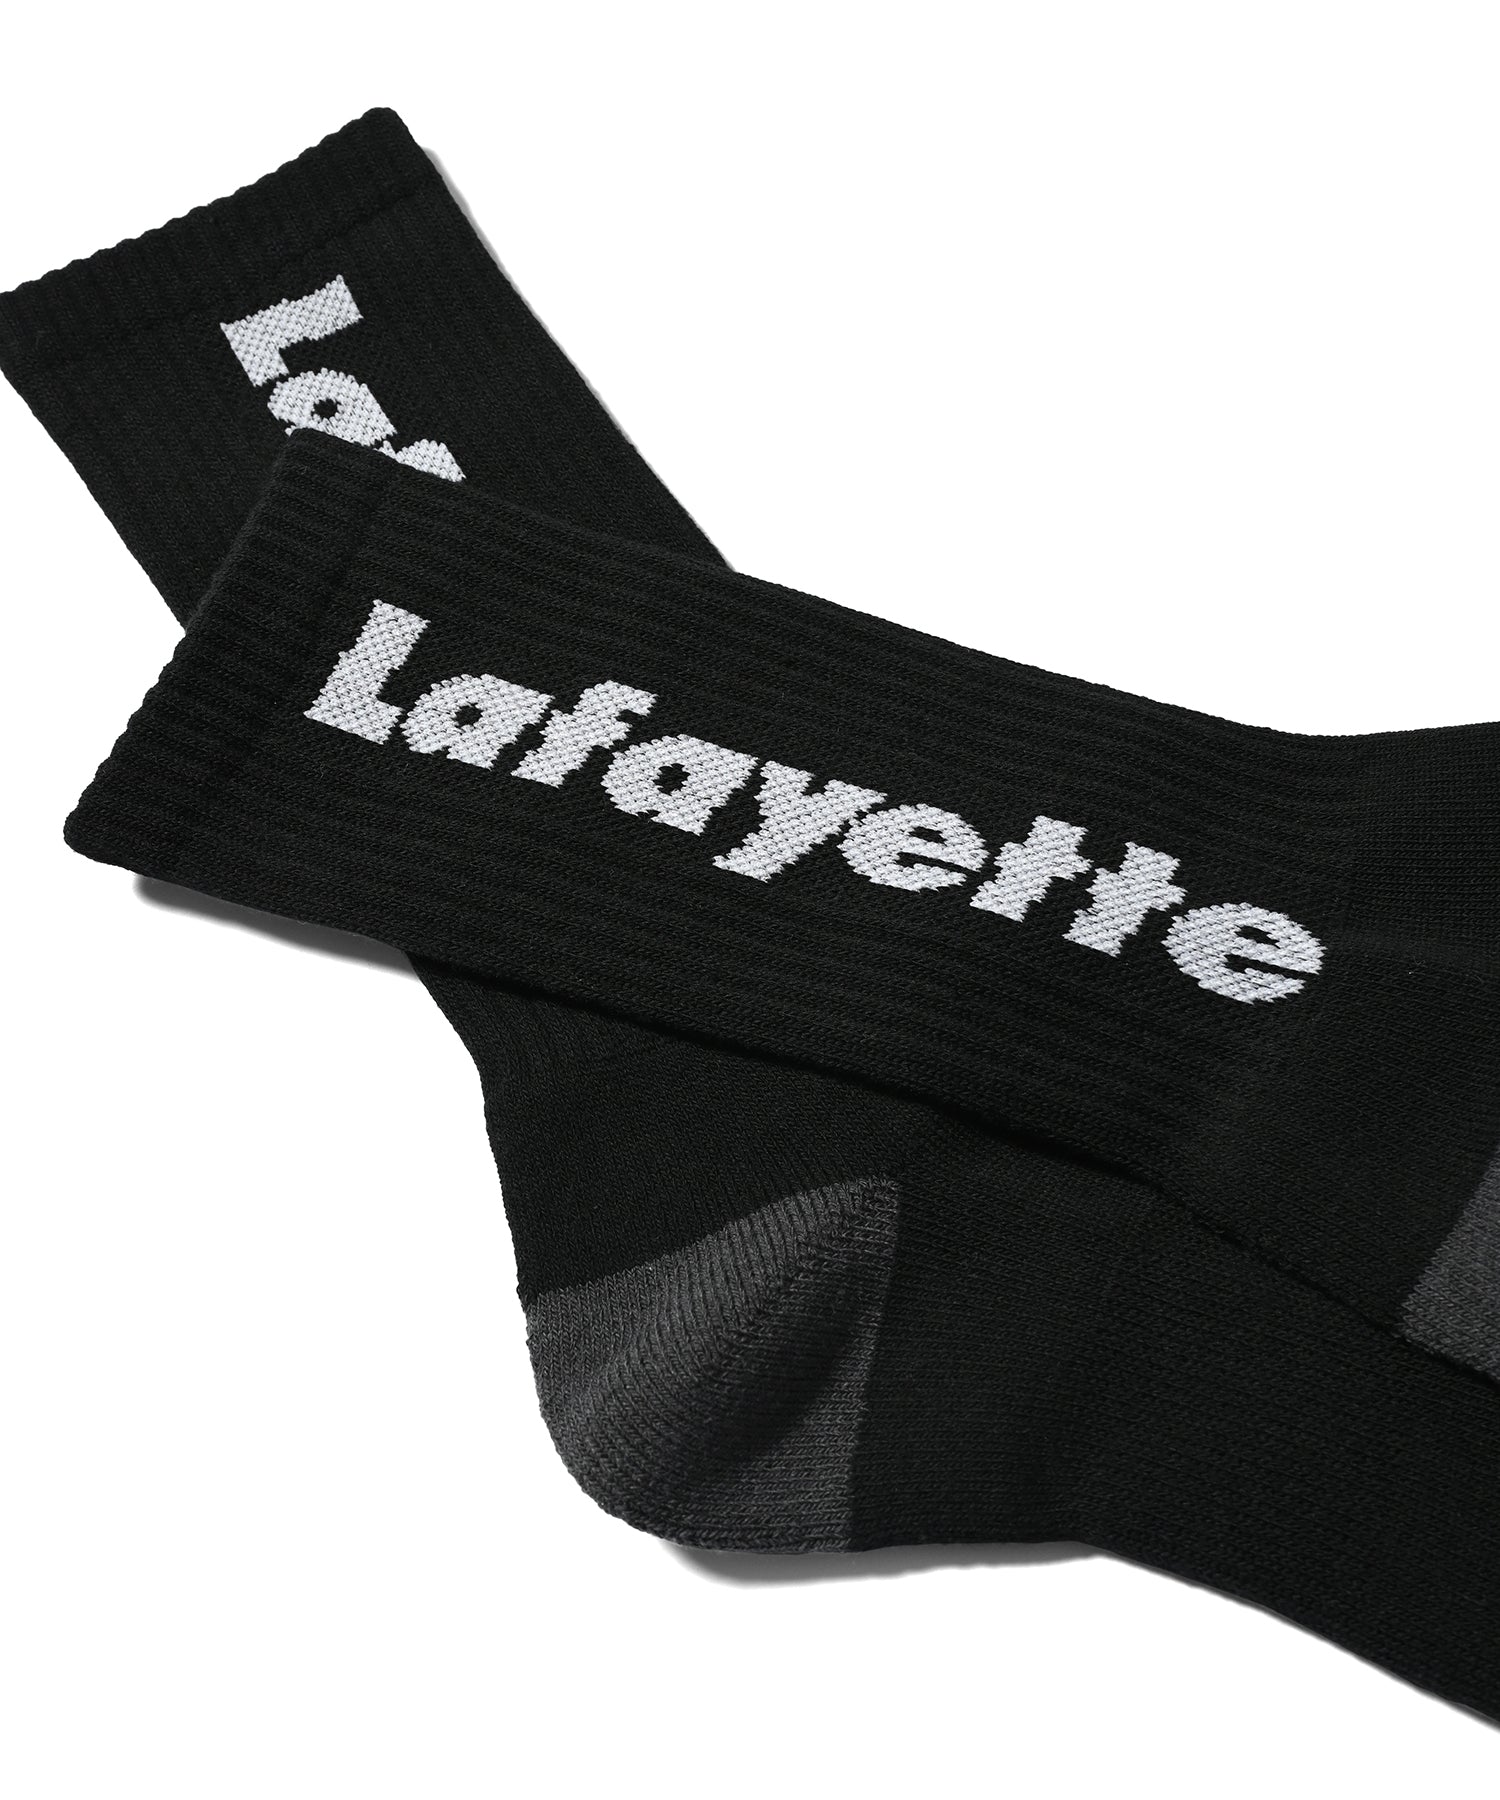 LFYT - LAFAYETTE LOGO CREW SOCKS LS242101